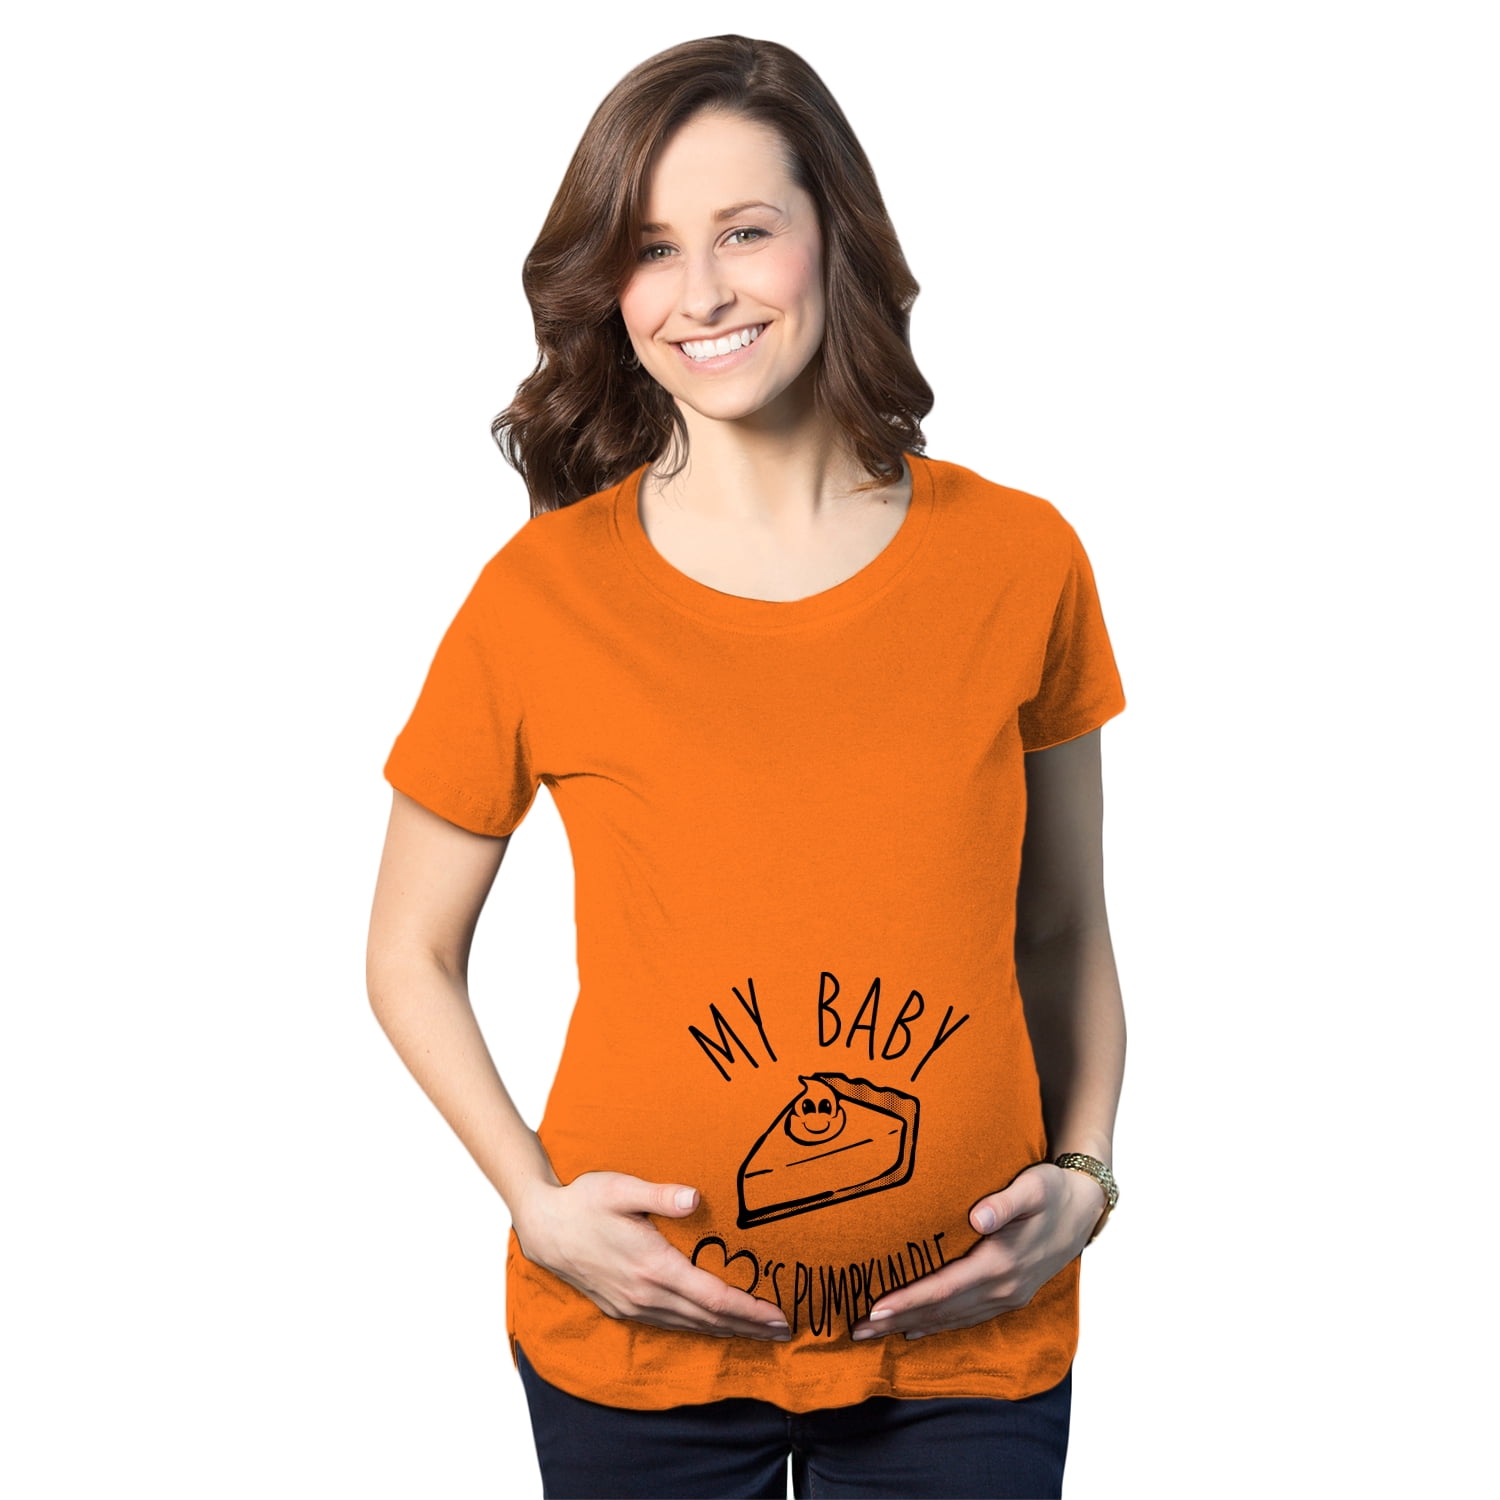 Don't Eat Pumpkin Seeds Tshirt Expecting Mom Shirt Fall Baby Reveal Tee Pumpkin Pregnancy Announcement Shirt Top Autumn Pregnant Shirt